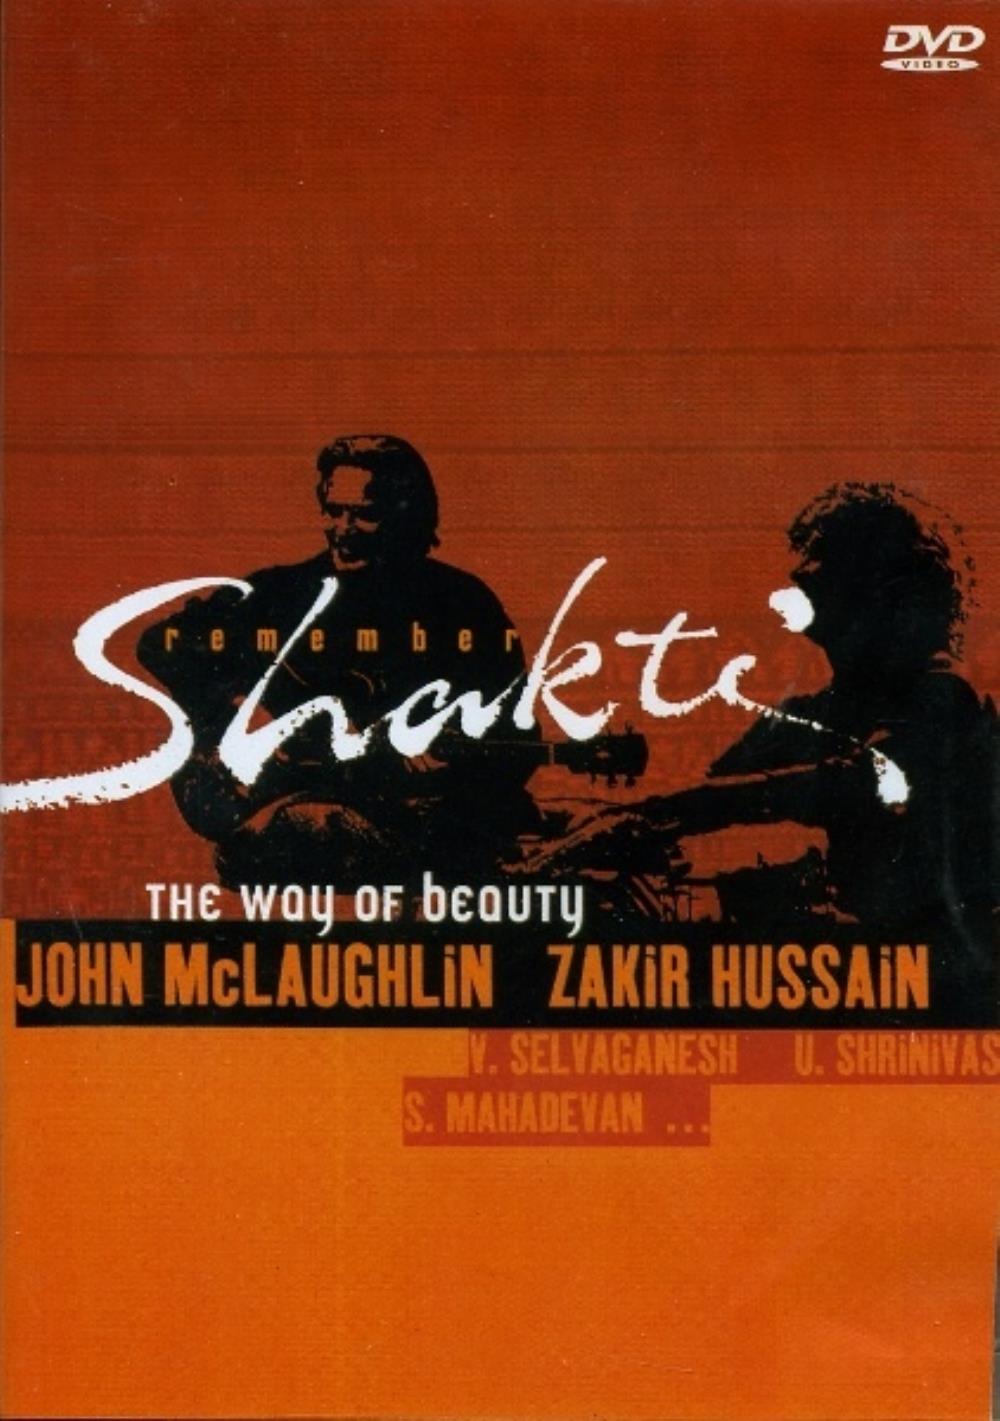 Shakti With John McLaughlin Remember Shakti - The Way of Beauty album cover